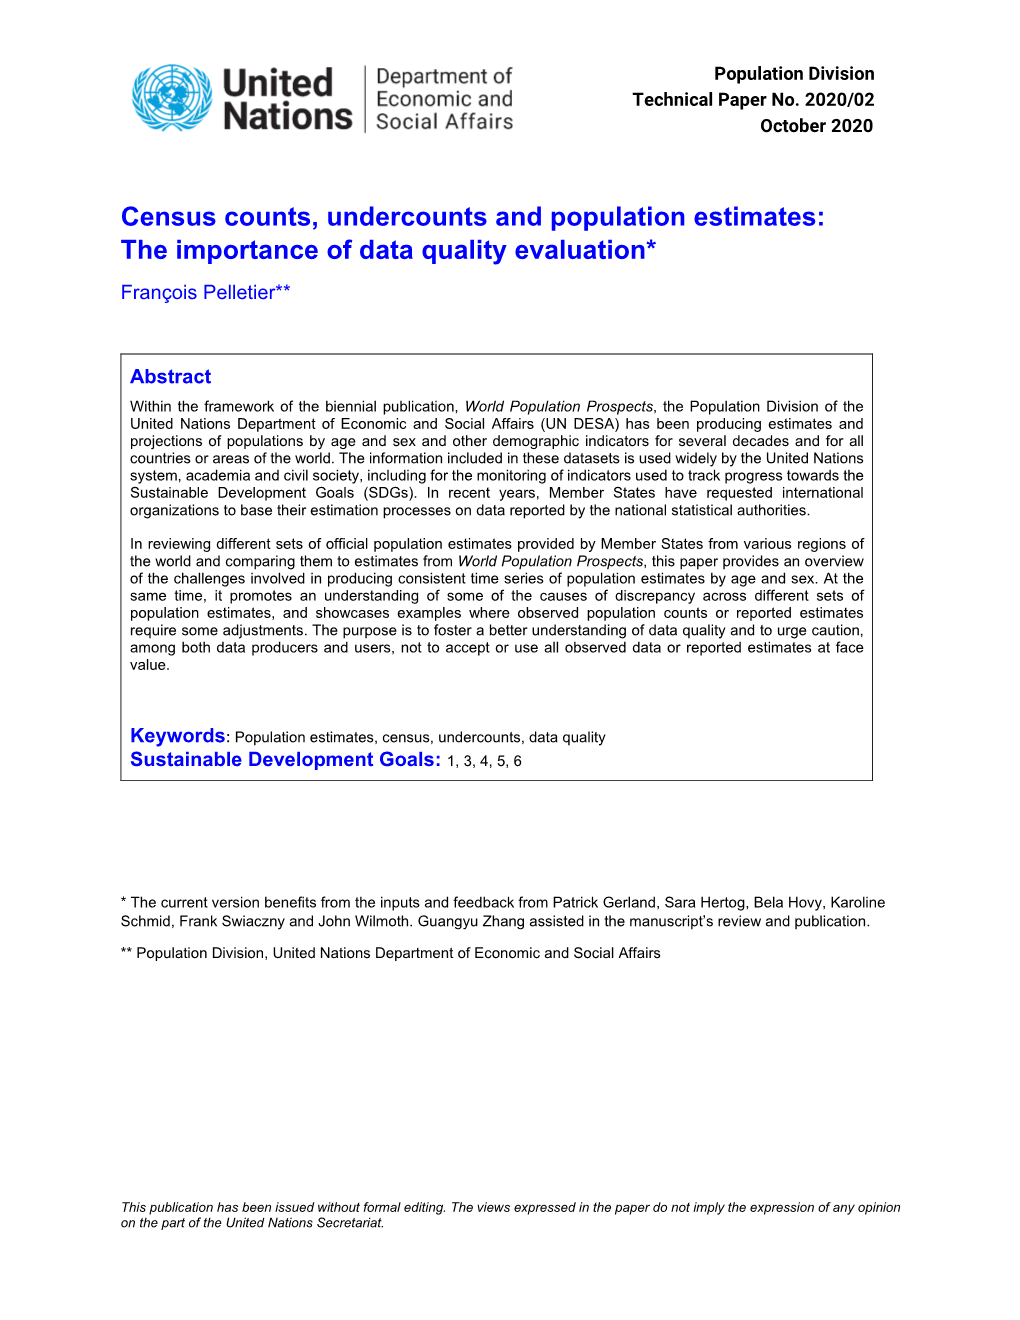 Census Counts, Undercounts and Population Estimates: the Importance of Data Quality Evaluation* François Pelletier**